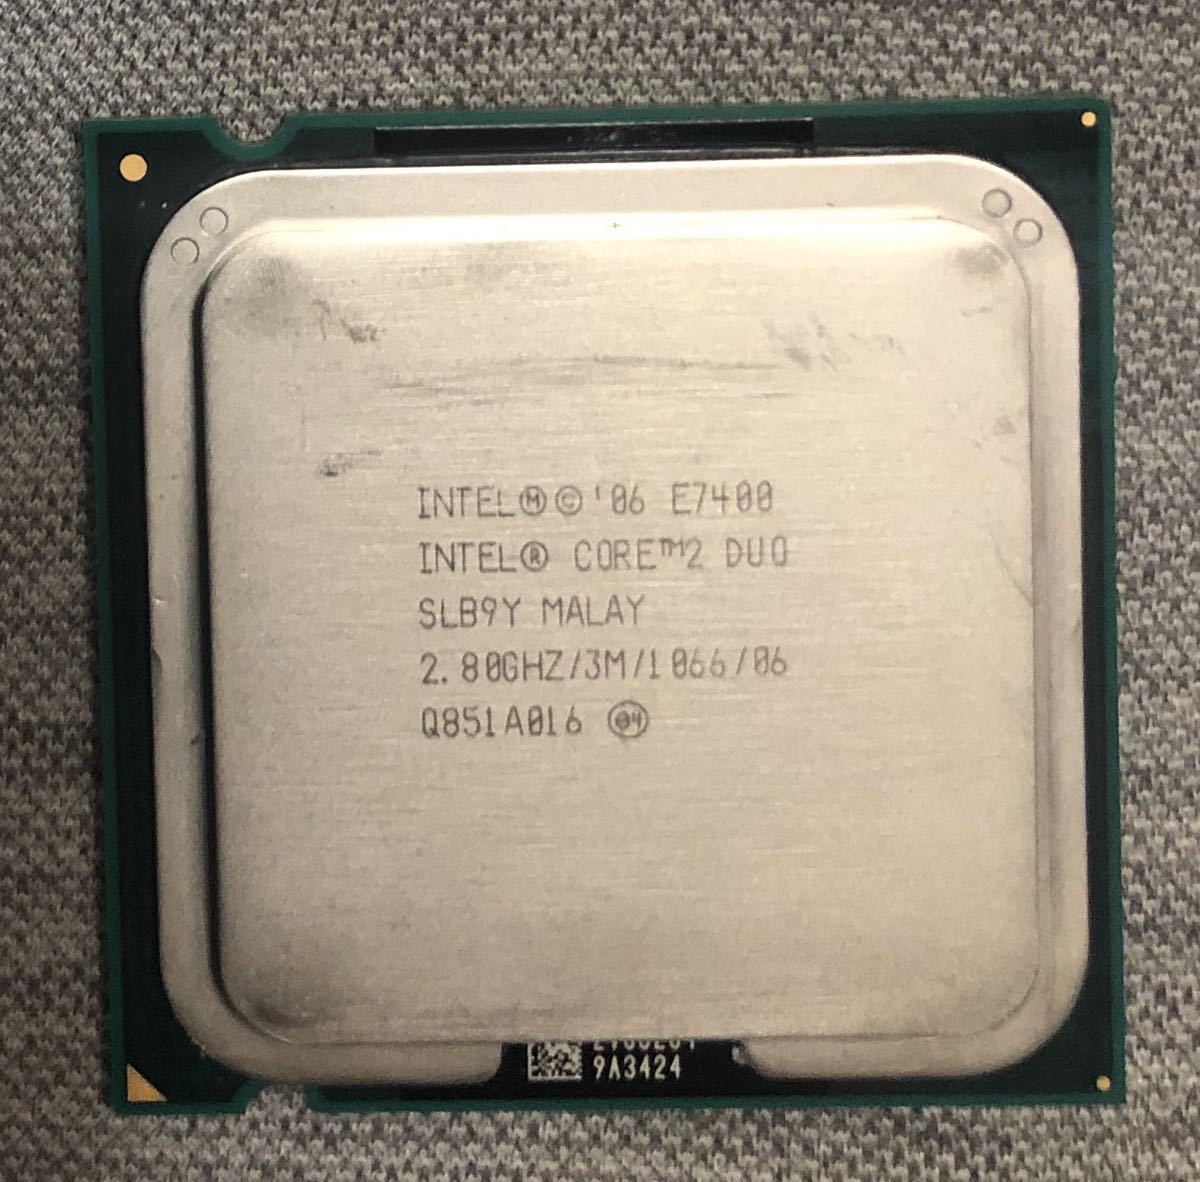 Intel Core2Duo 06 E7400 2.8GHZ